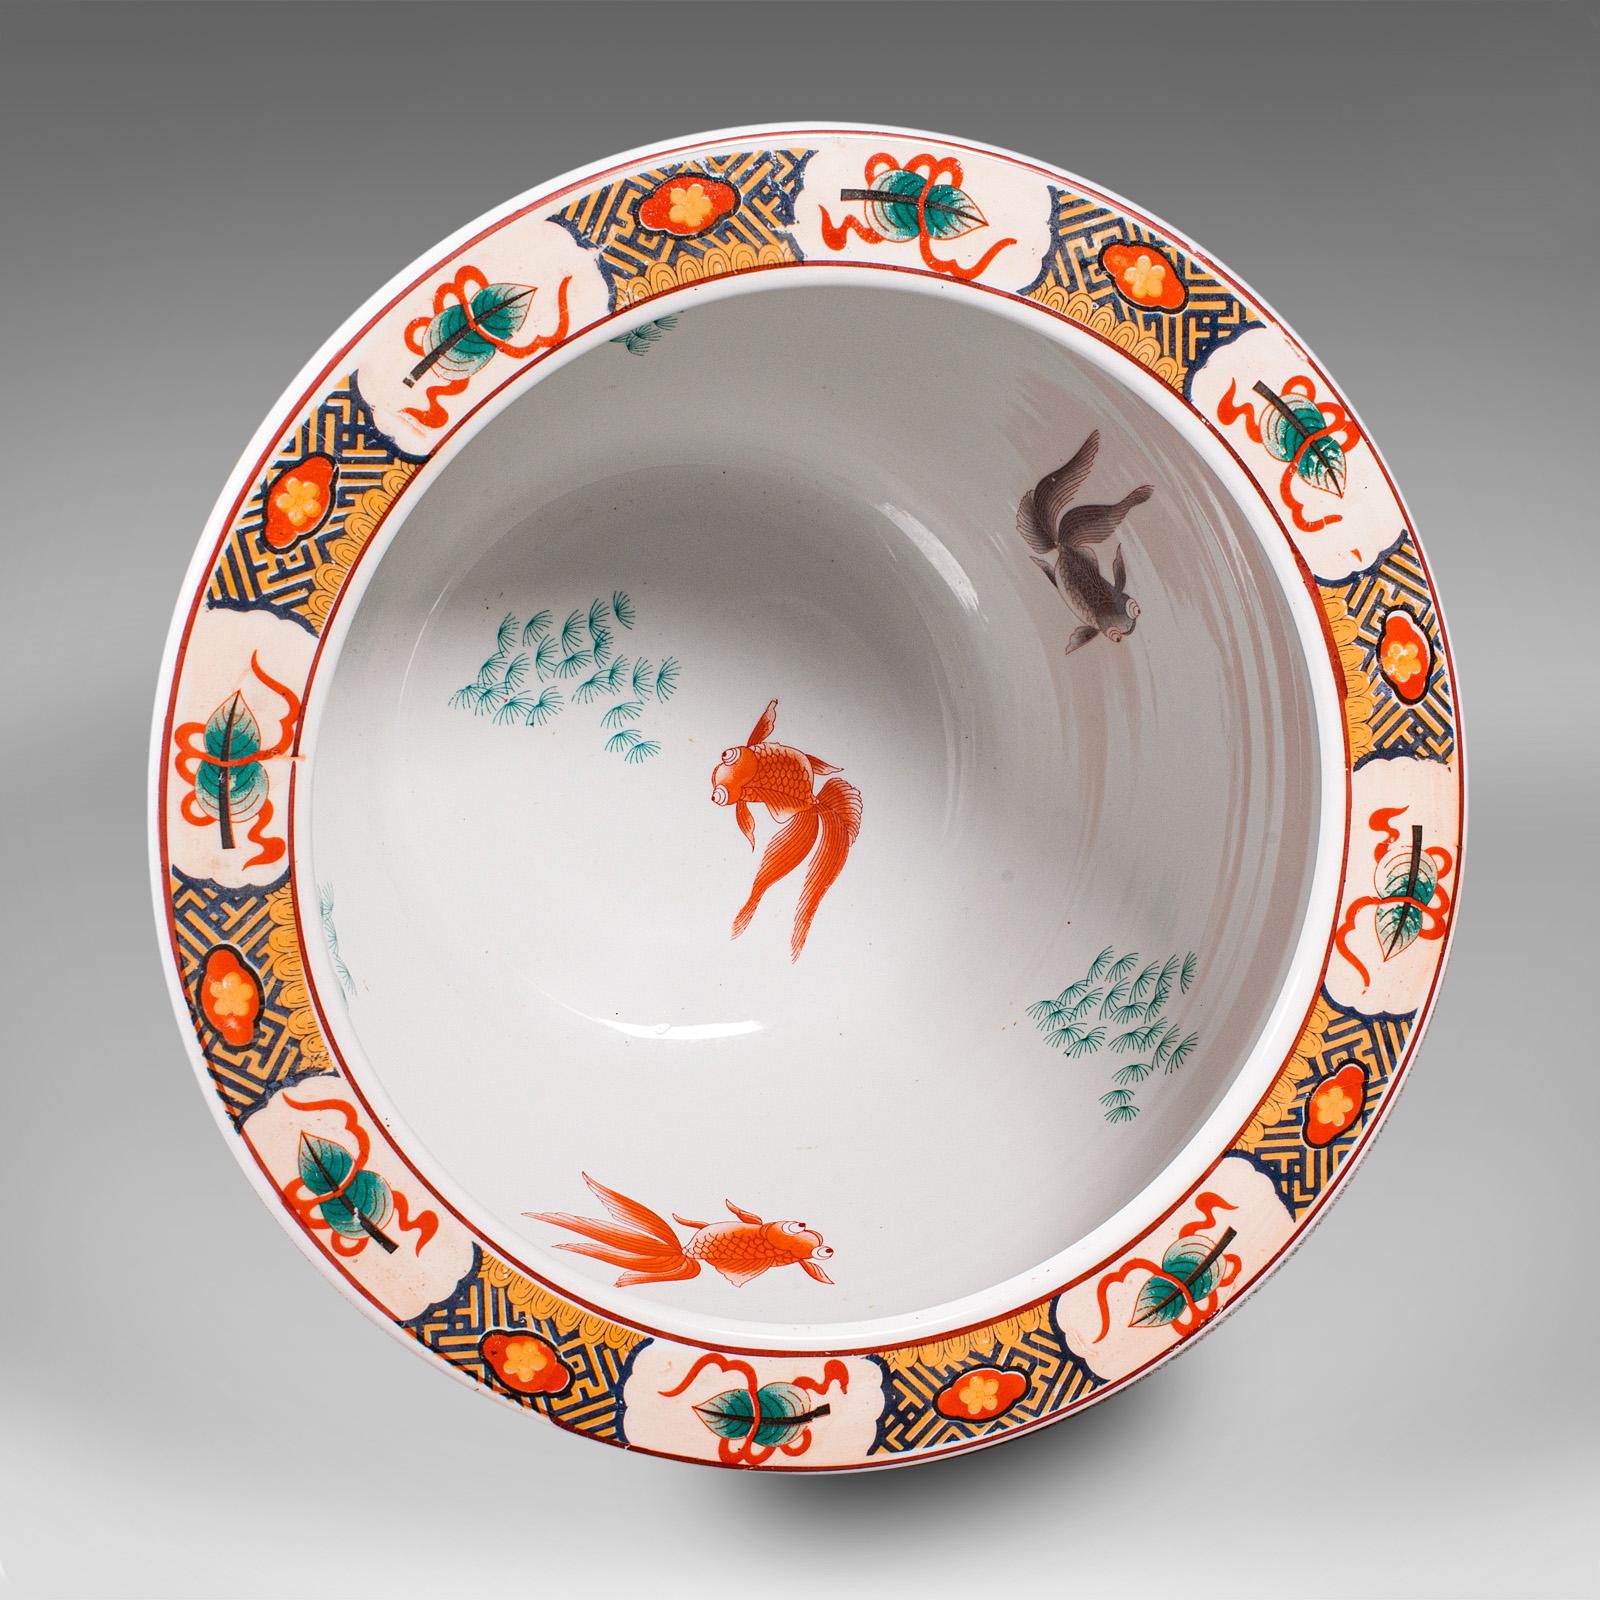 20th Century Vintage Decorative Fish Bowl, Chinese, Ceramic, Jardiniere, Planter, Art Deco